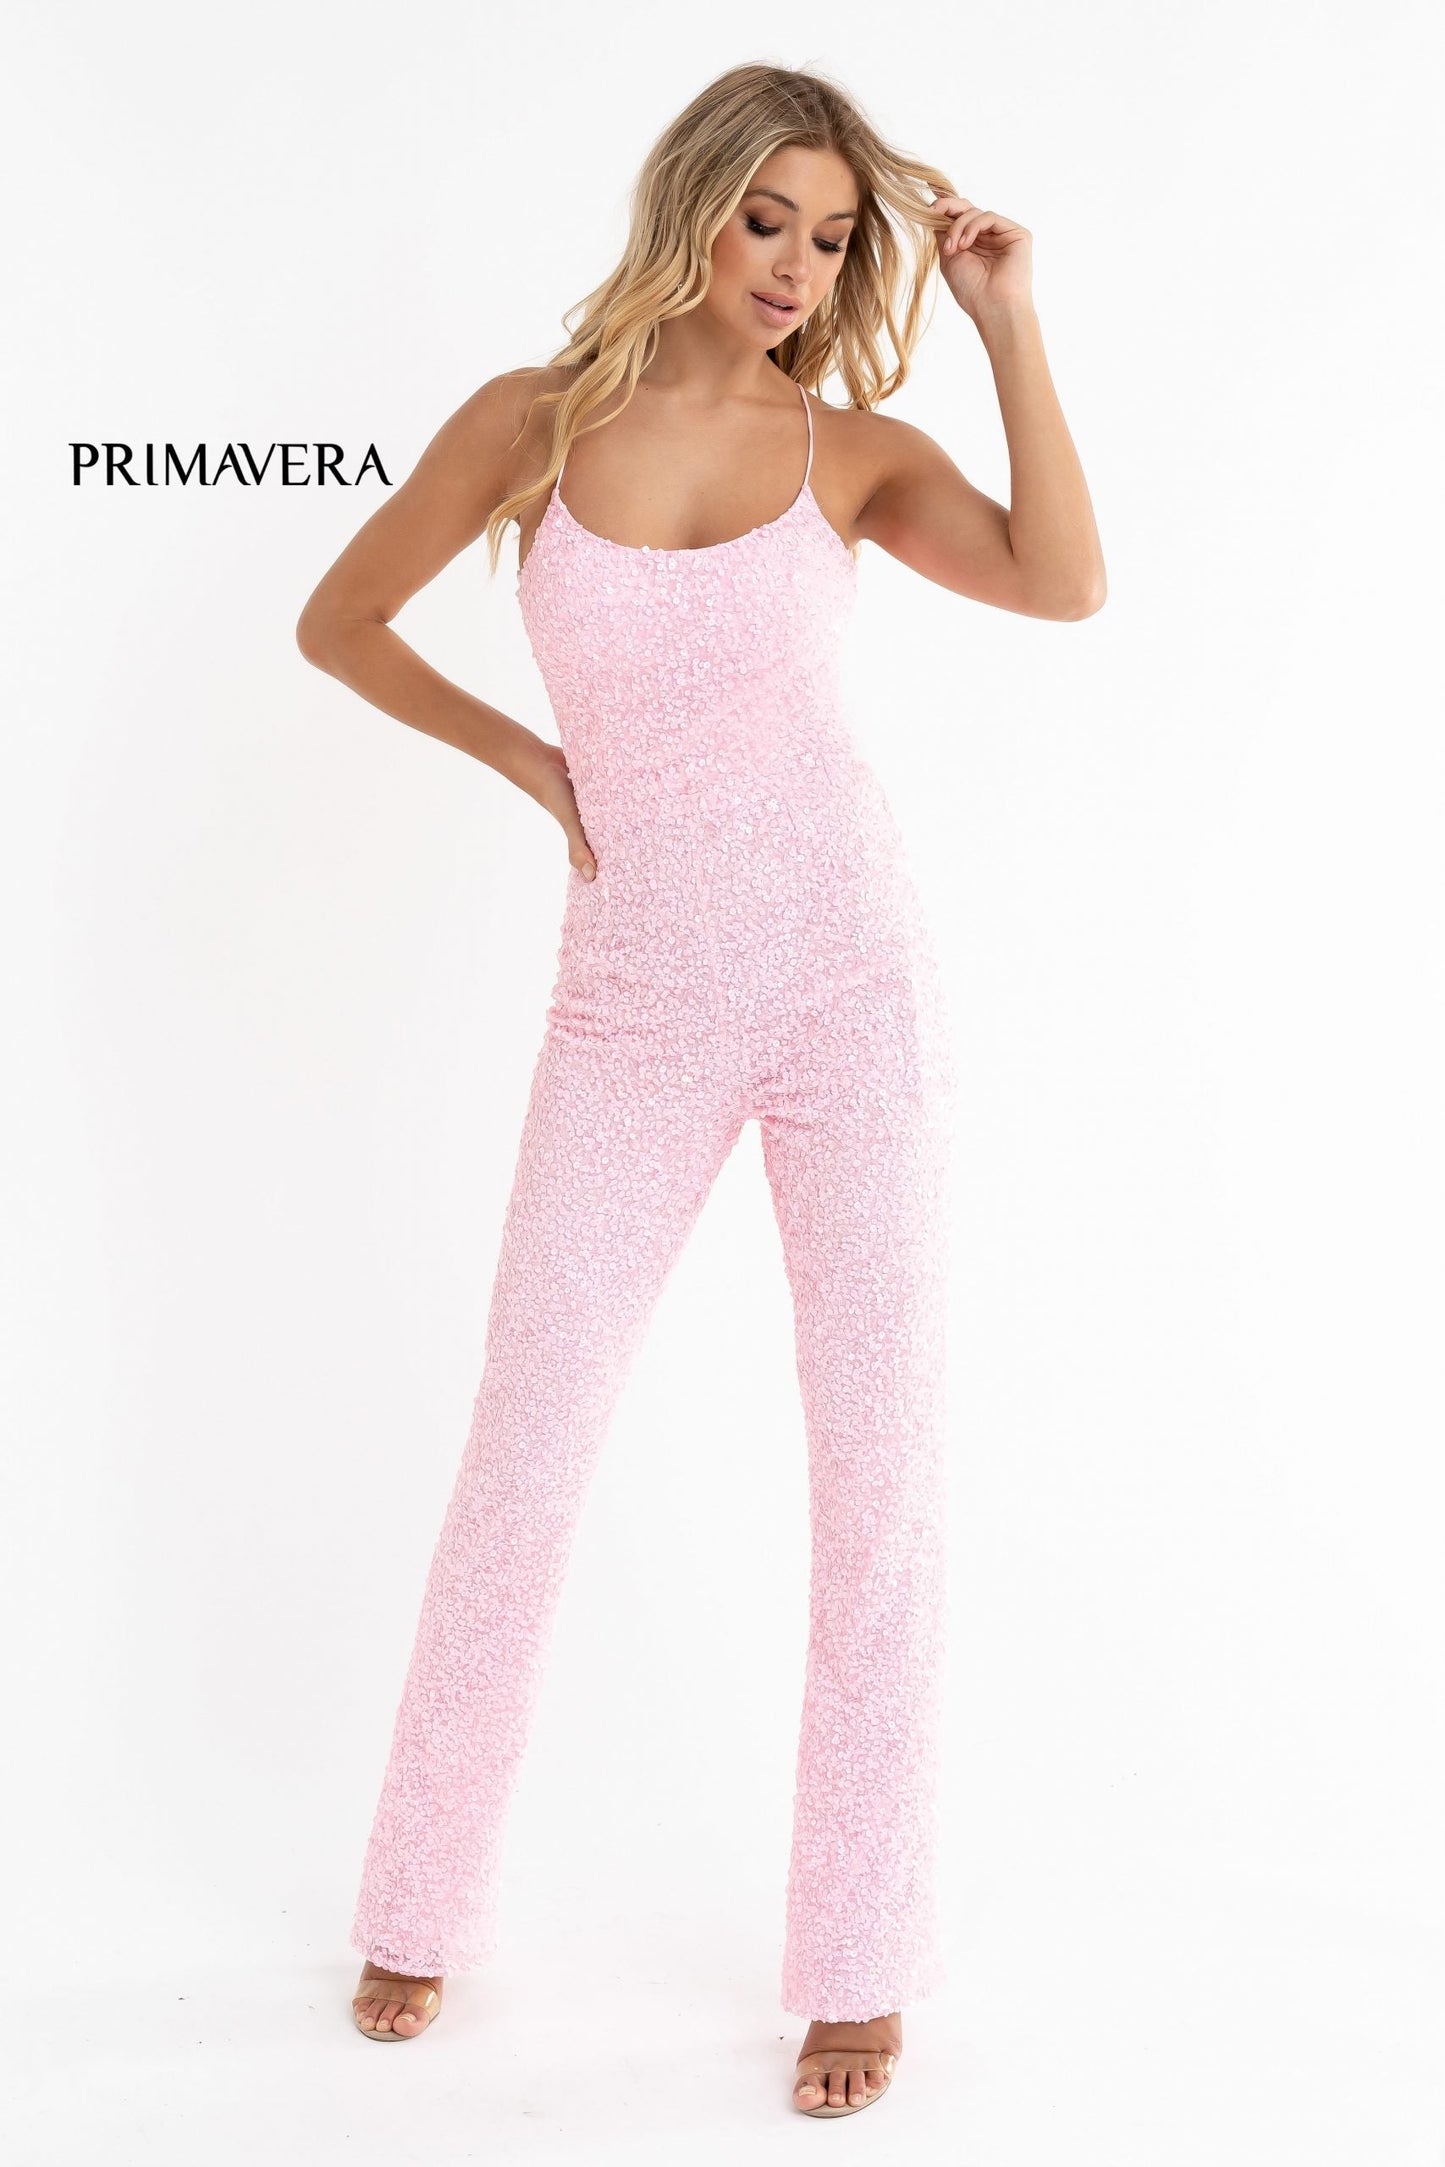 Primavera Couture 3774 Size 0 Neon Pink Sequin Jumpsuit Scoop Neckline Lace Up Tie Back Straight Legs